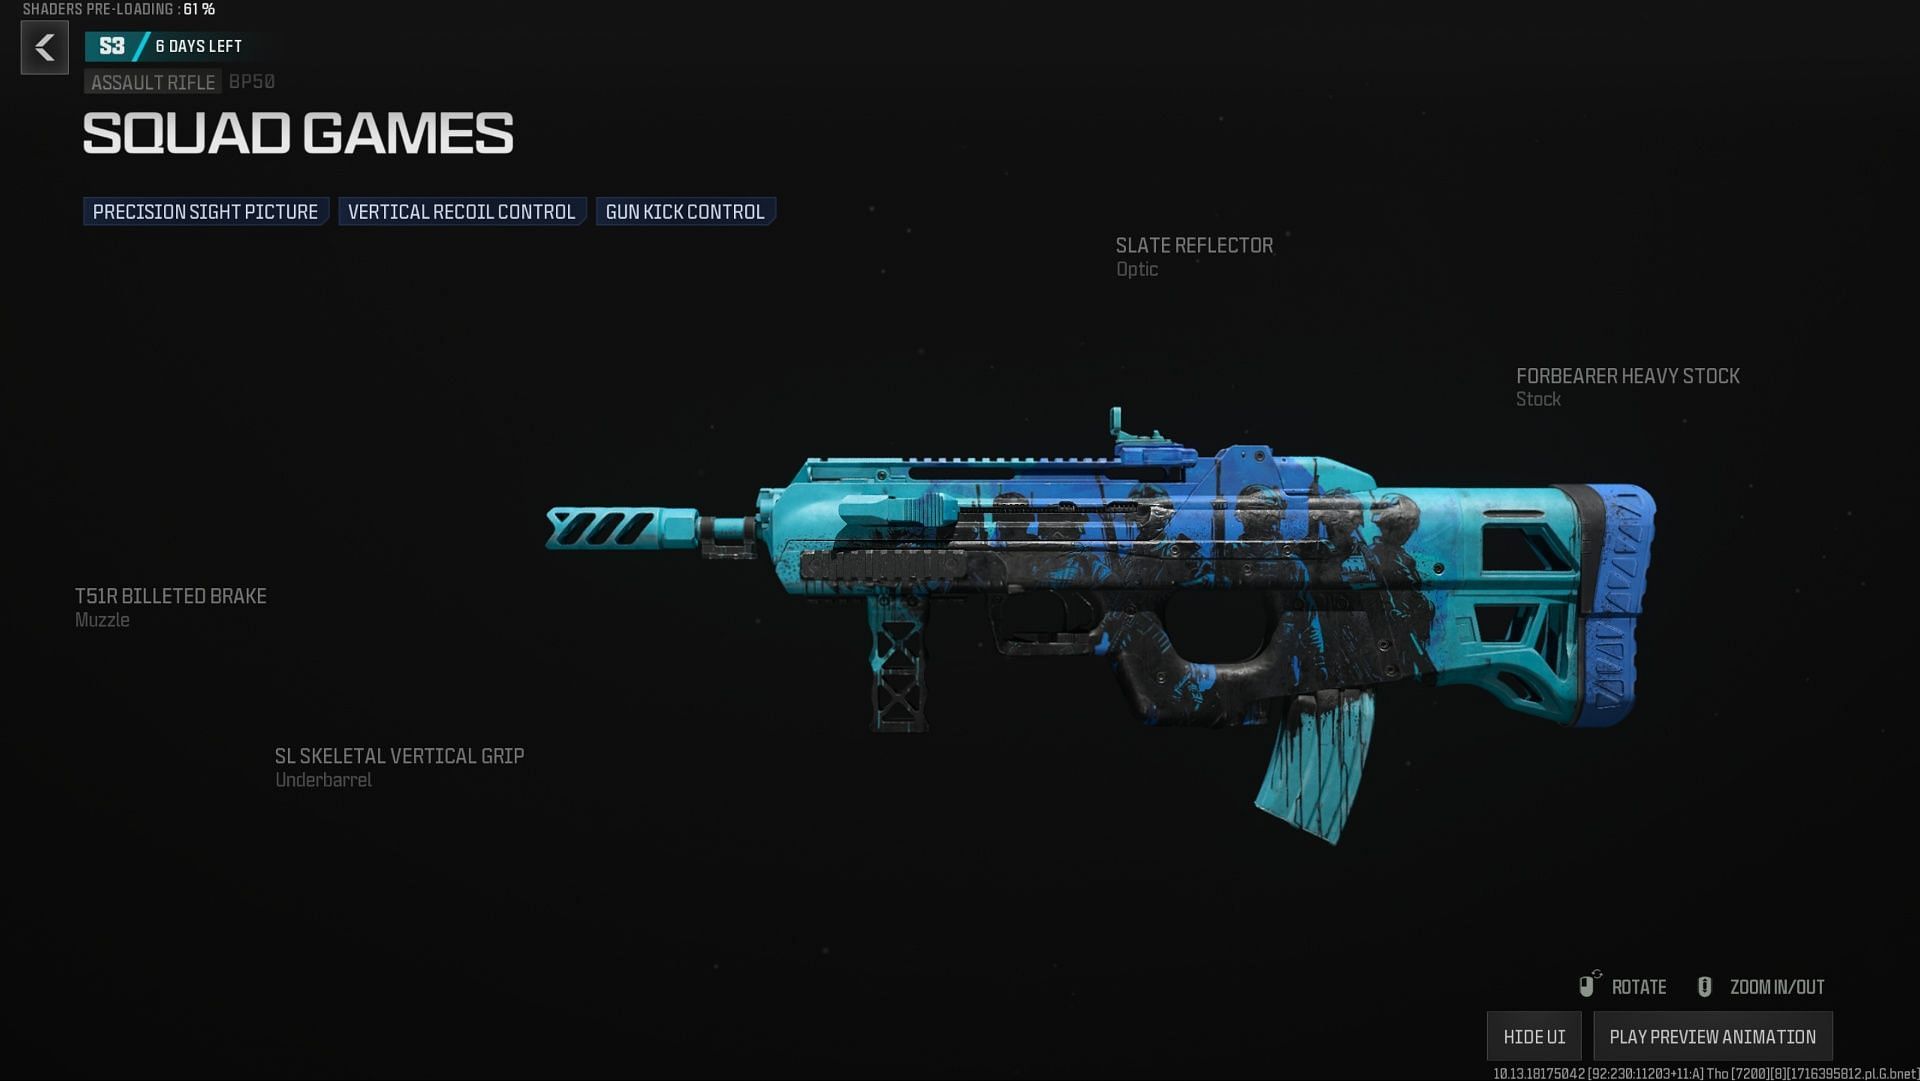 Squad Games Blueprint for BP50 assault rifle (Image via Activision)